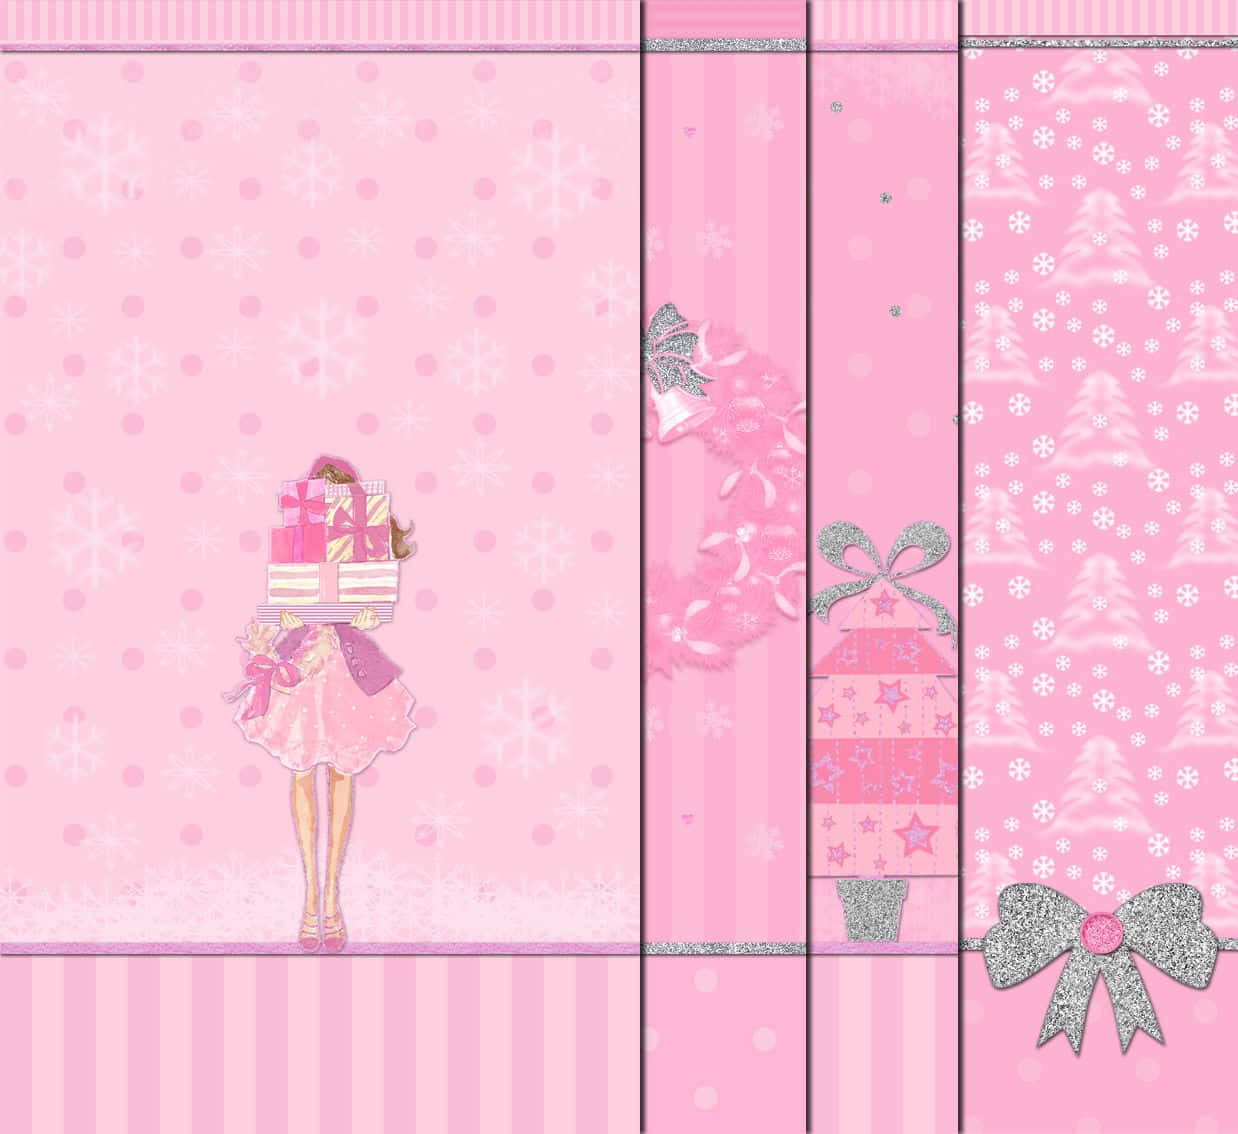 Gifts And Ribbons Cute Pink Christmas Wallpaper